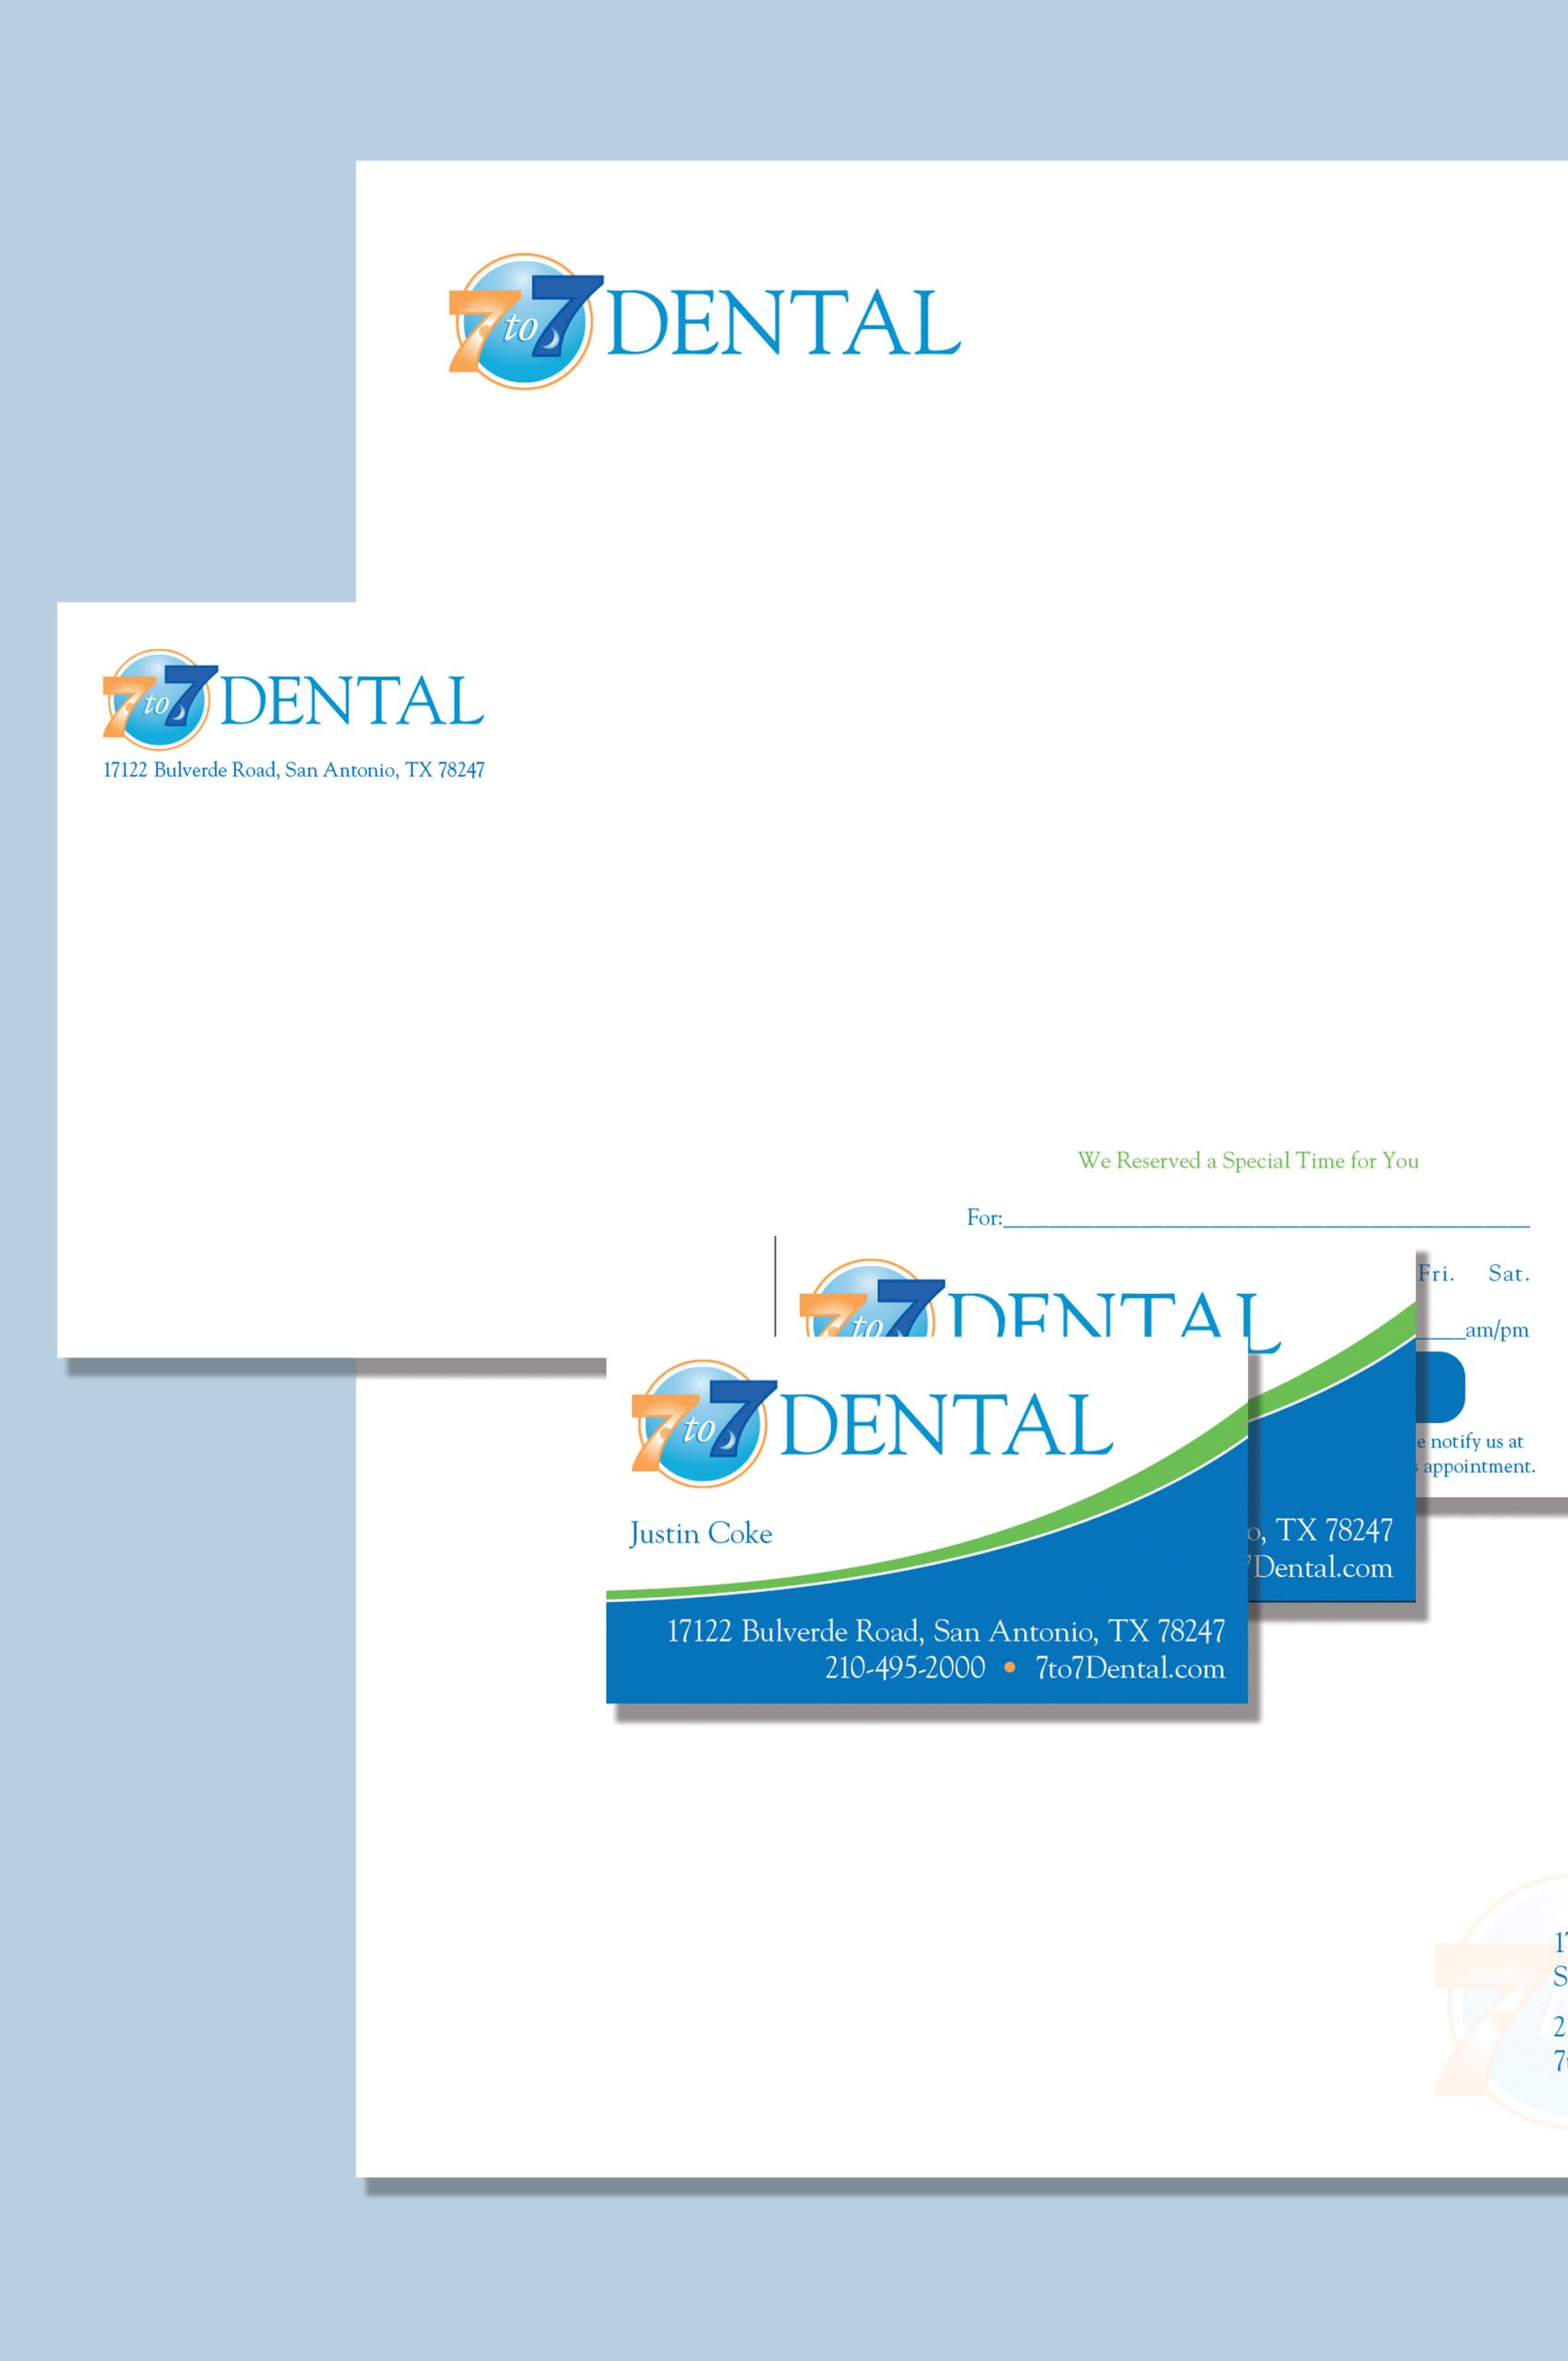 7 to 7 Dental & Orthodontics Stationary